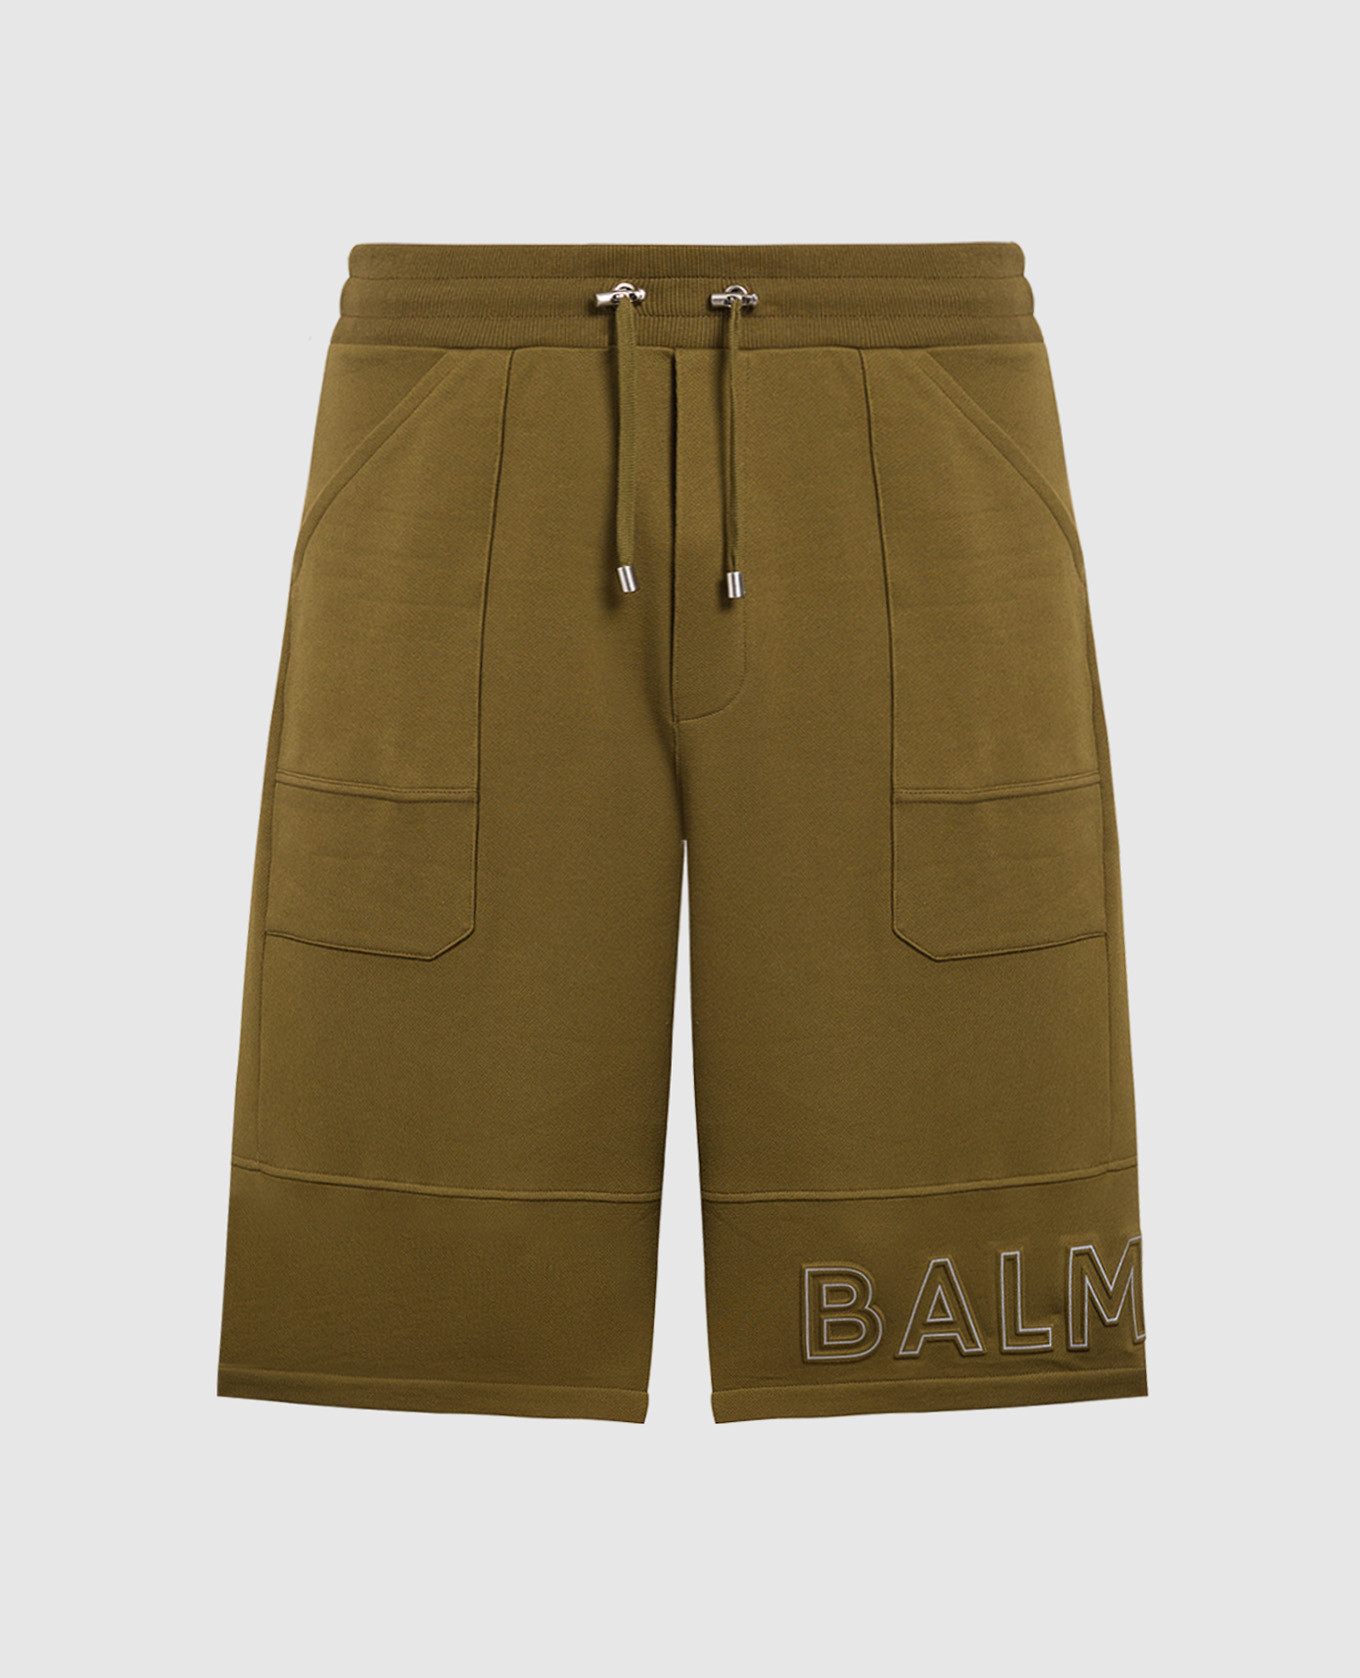 Khaki shorts with textured logo